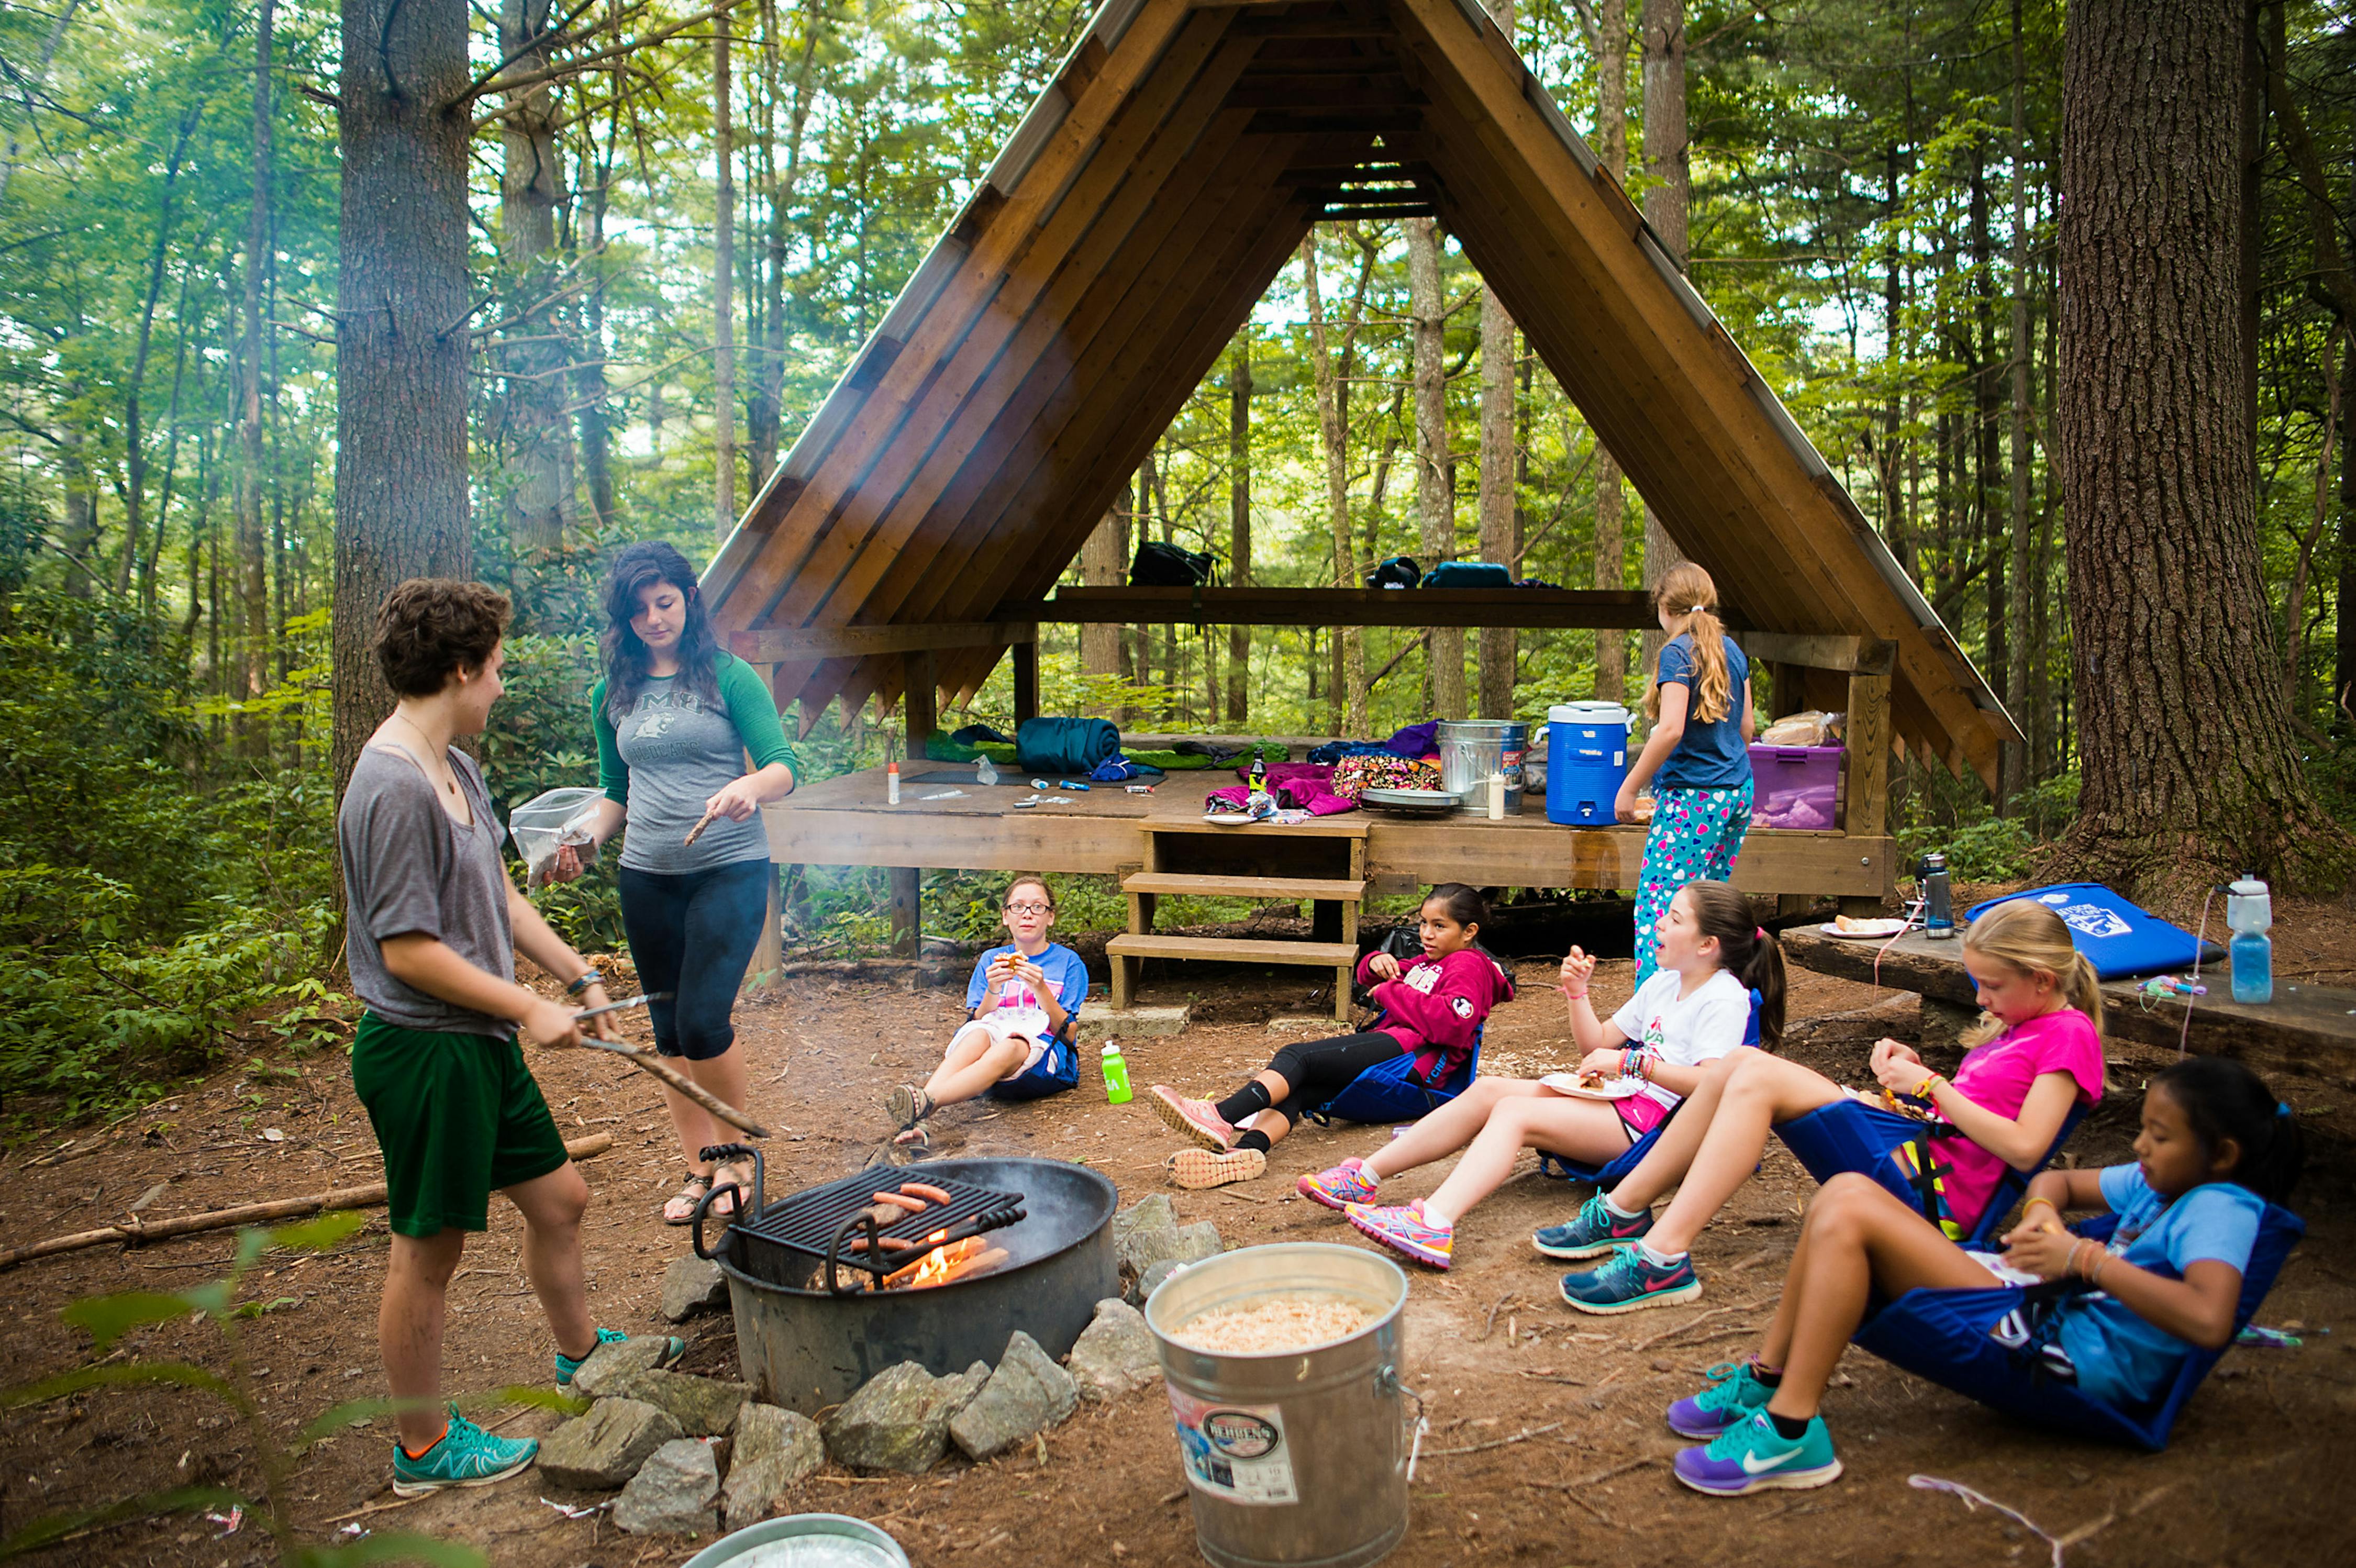 Nc Girls Summer Camp Keystone Activity Hiking And Camping